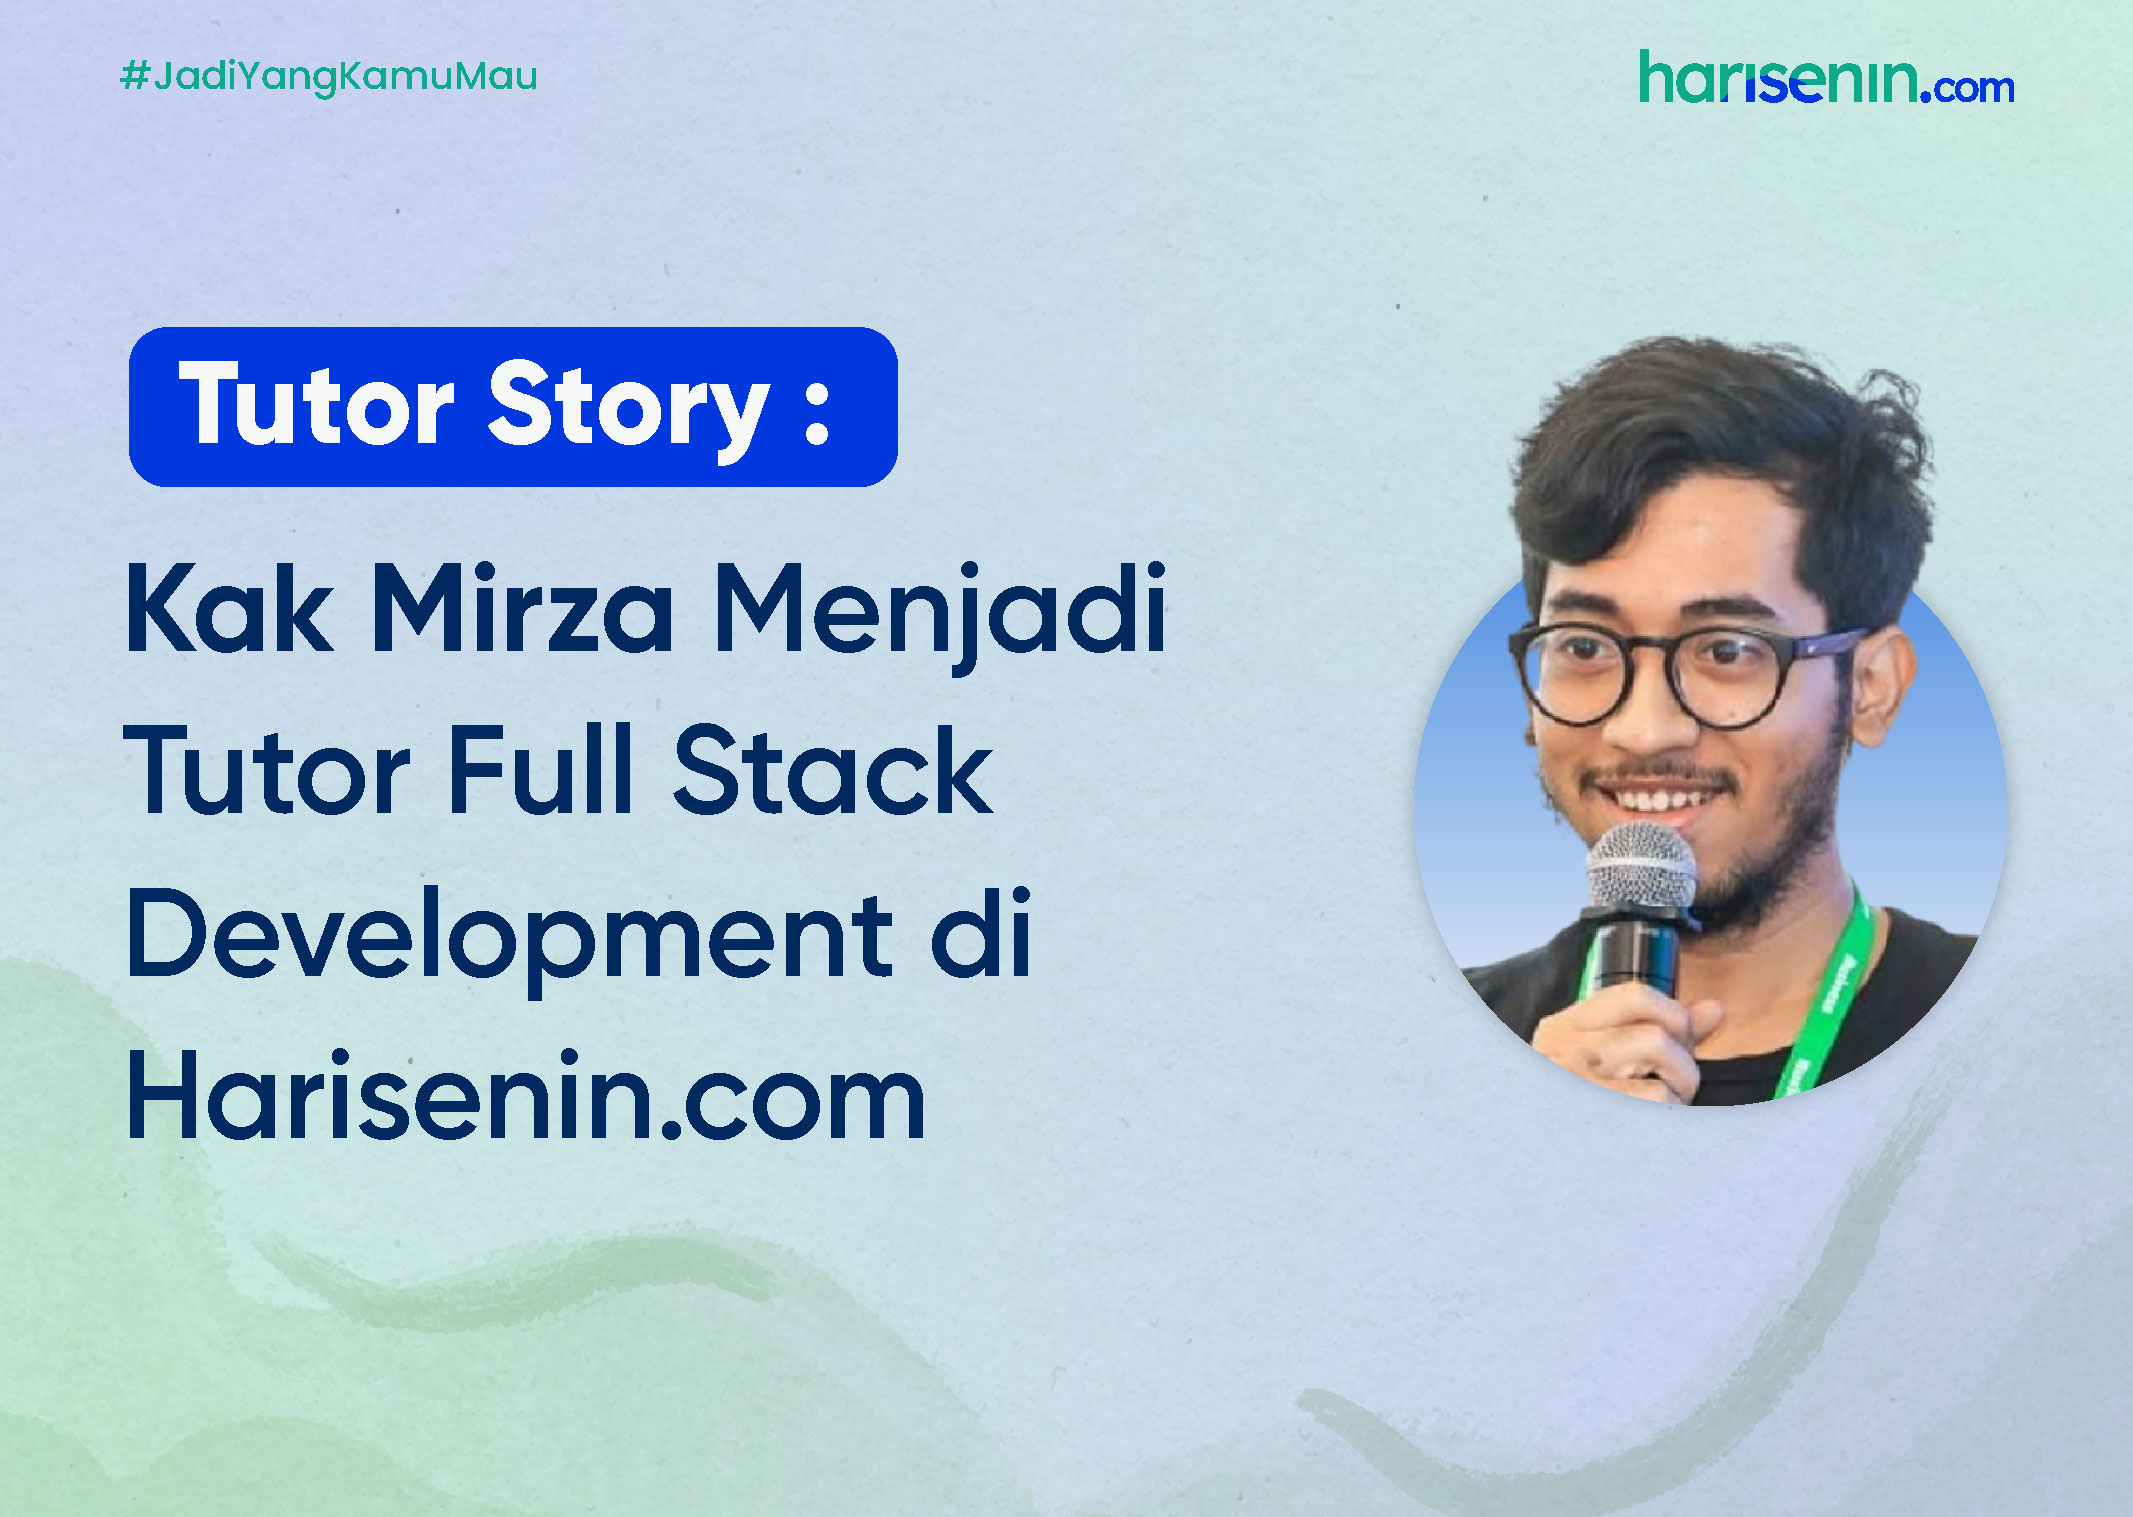 Tutor Story : Kak Mirza Menjadi Tutor Full Stack Development di Harisenin.com